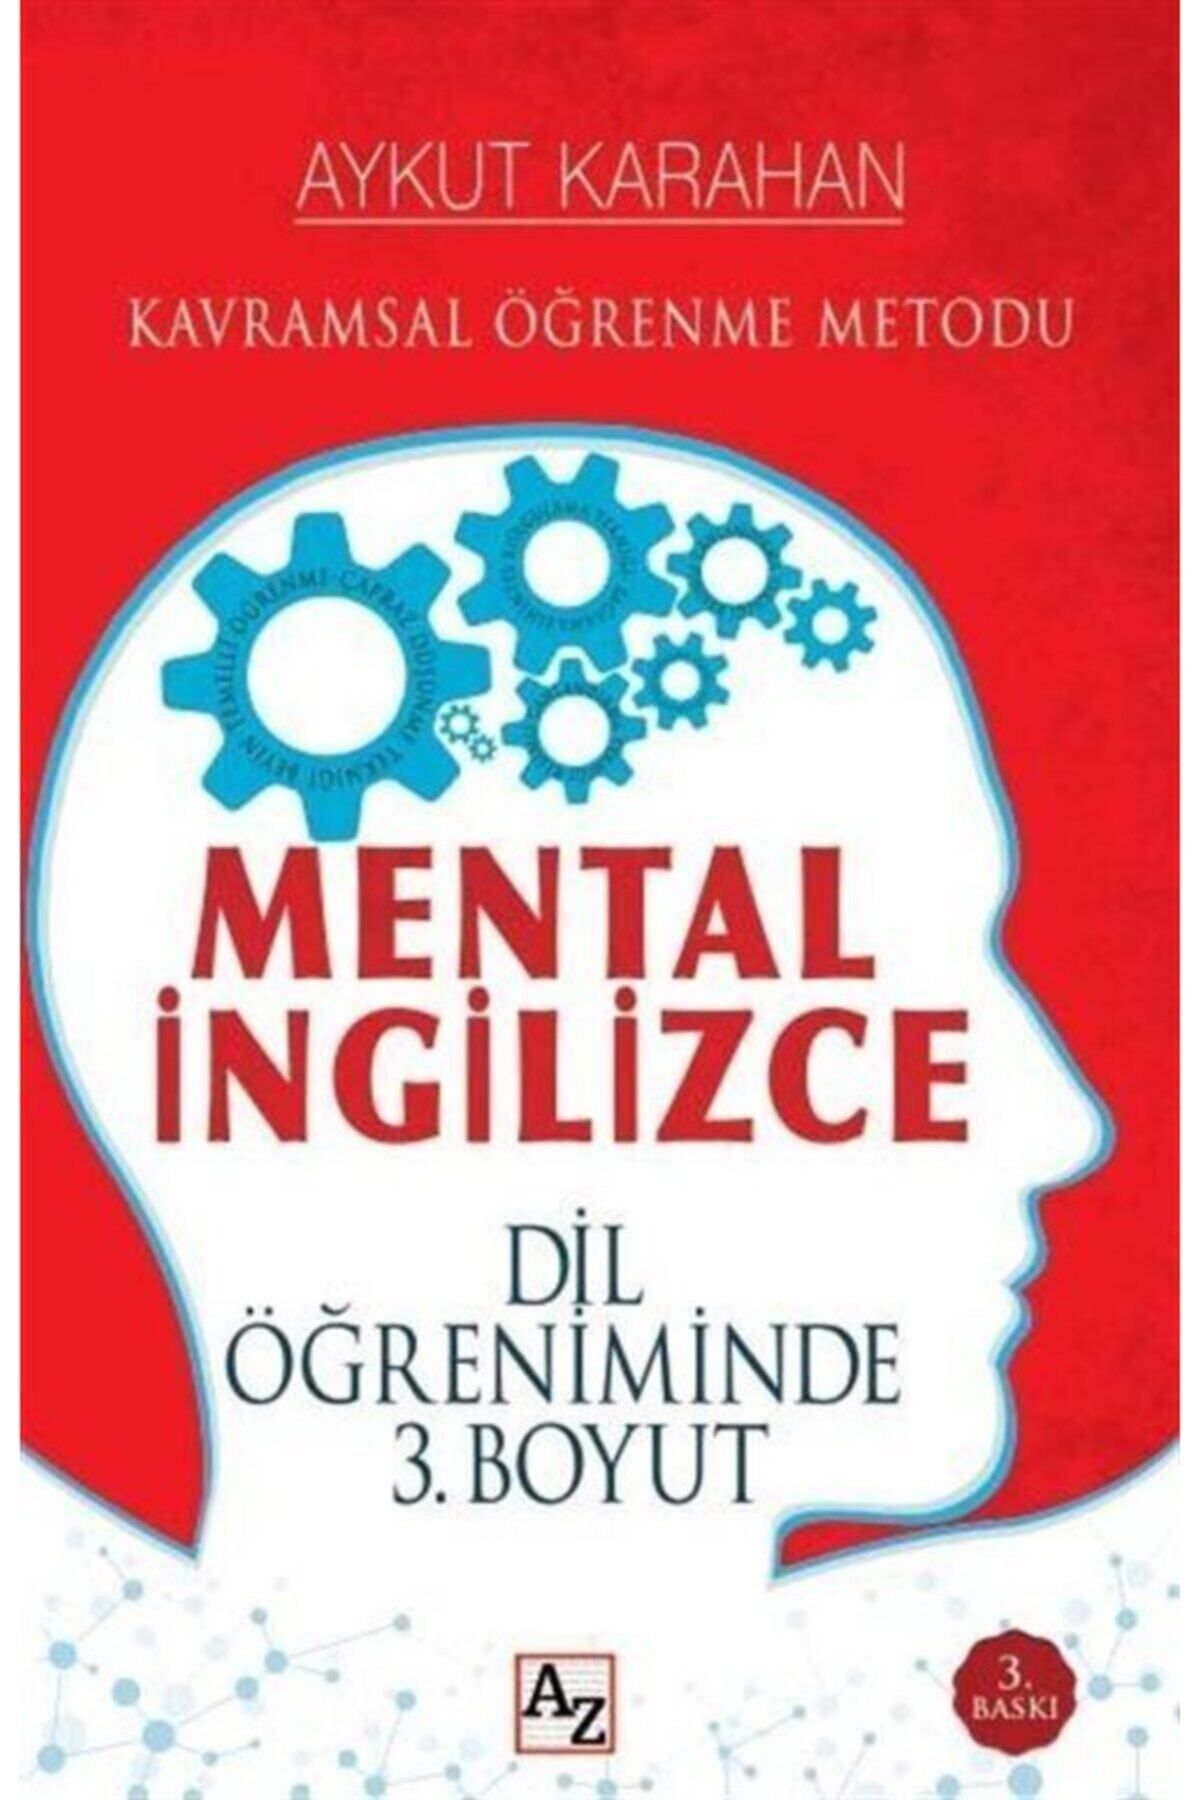 Az Kitap Mental Ingilizce & Dil Biliminde 3. Boyut- Aykut Karahan